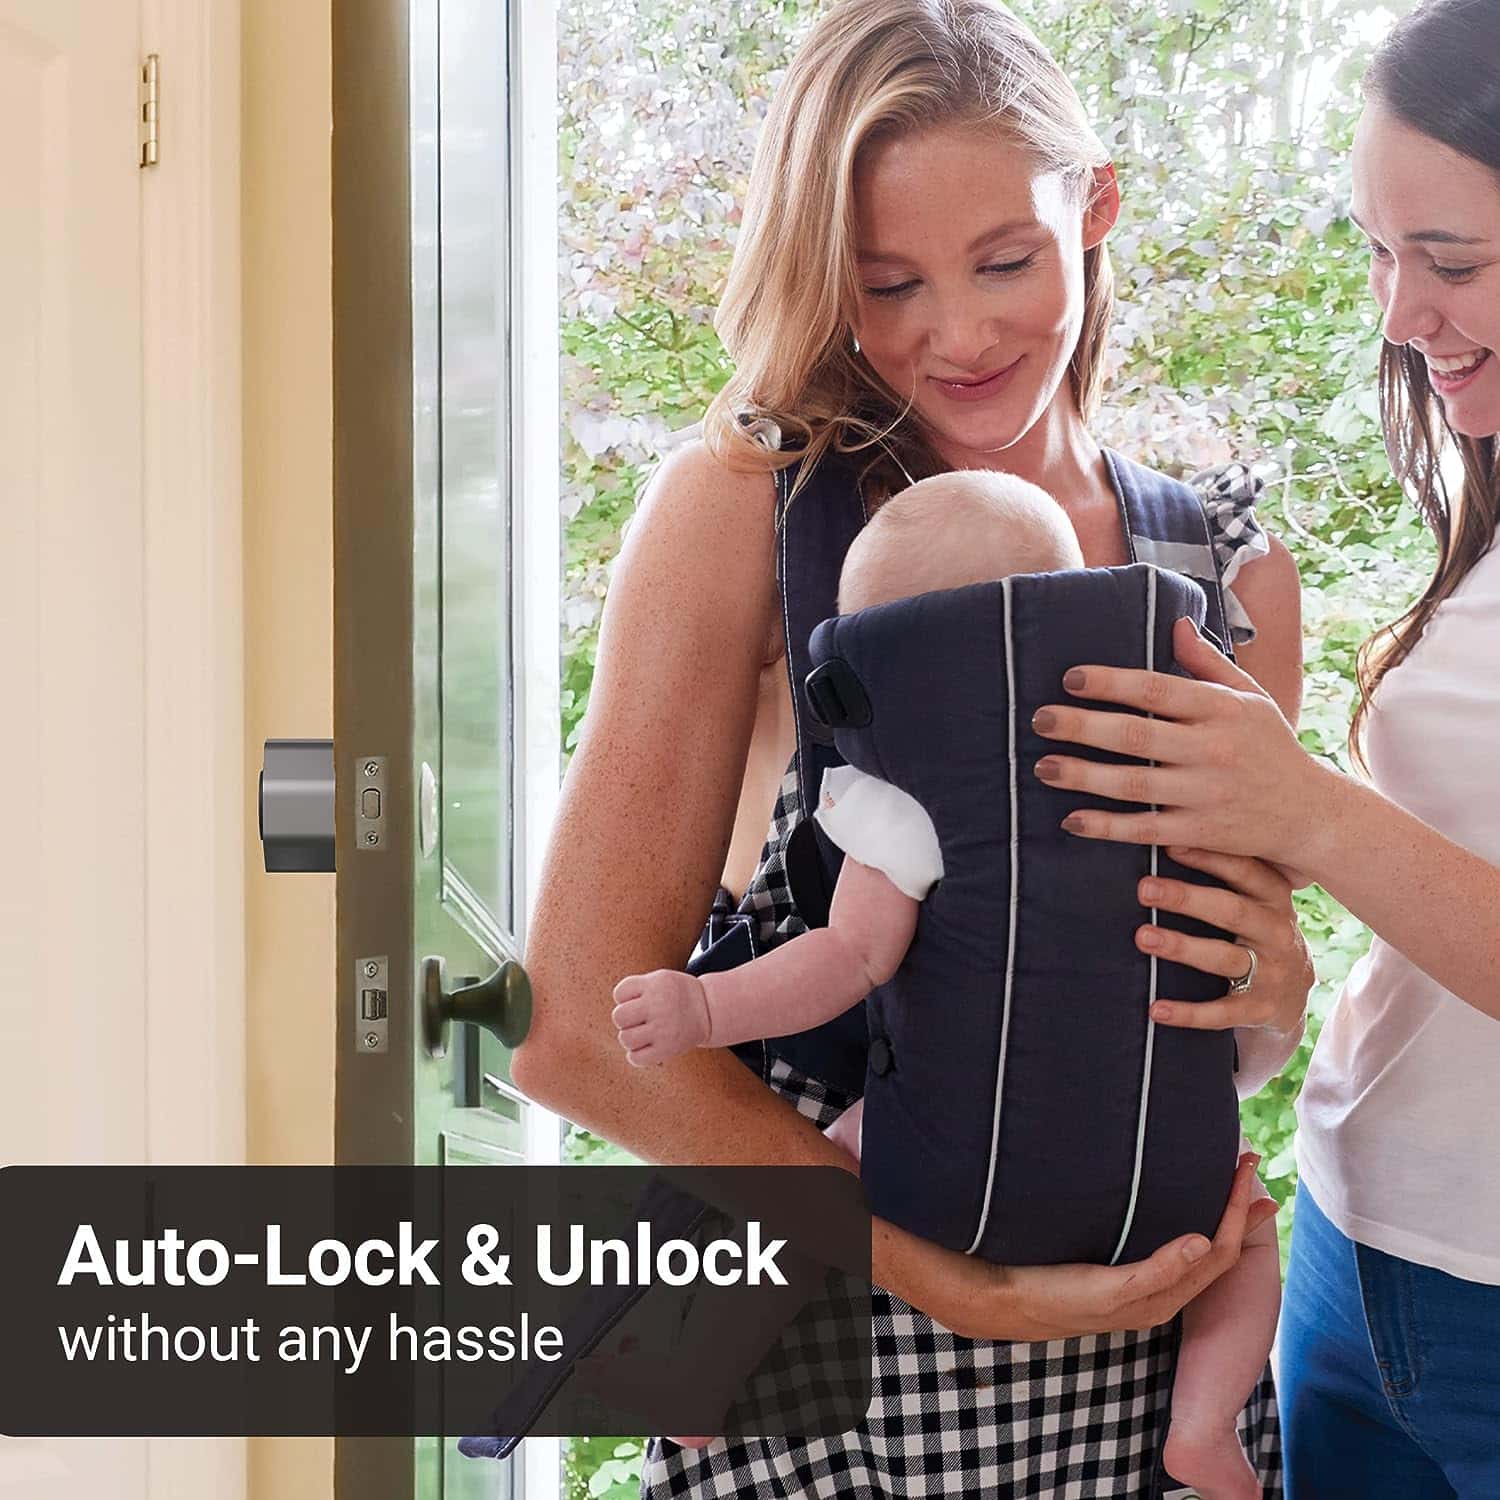 Bosma Aegis Smart Door Lock Review: The Ultimate Keyless Entry Solution